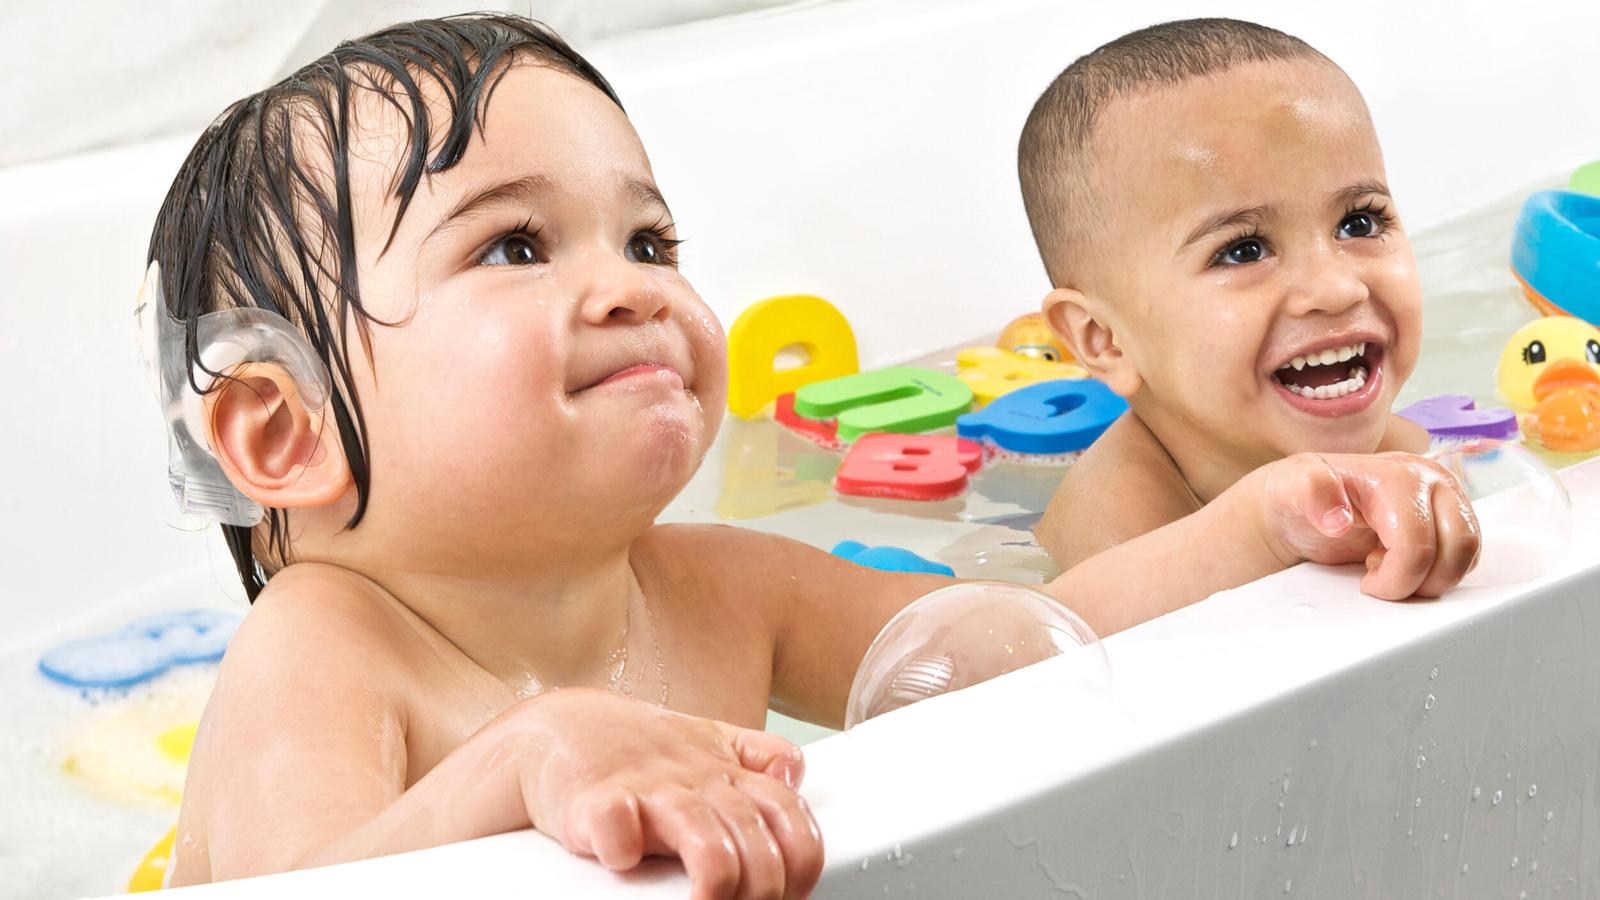 A toddler, one wearing an Aqua Accessory, has a bath with a friend